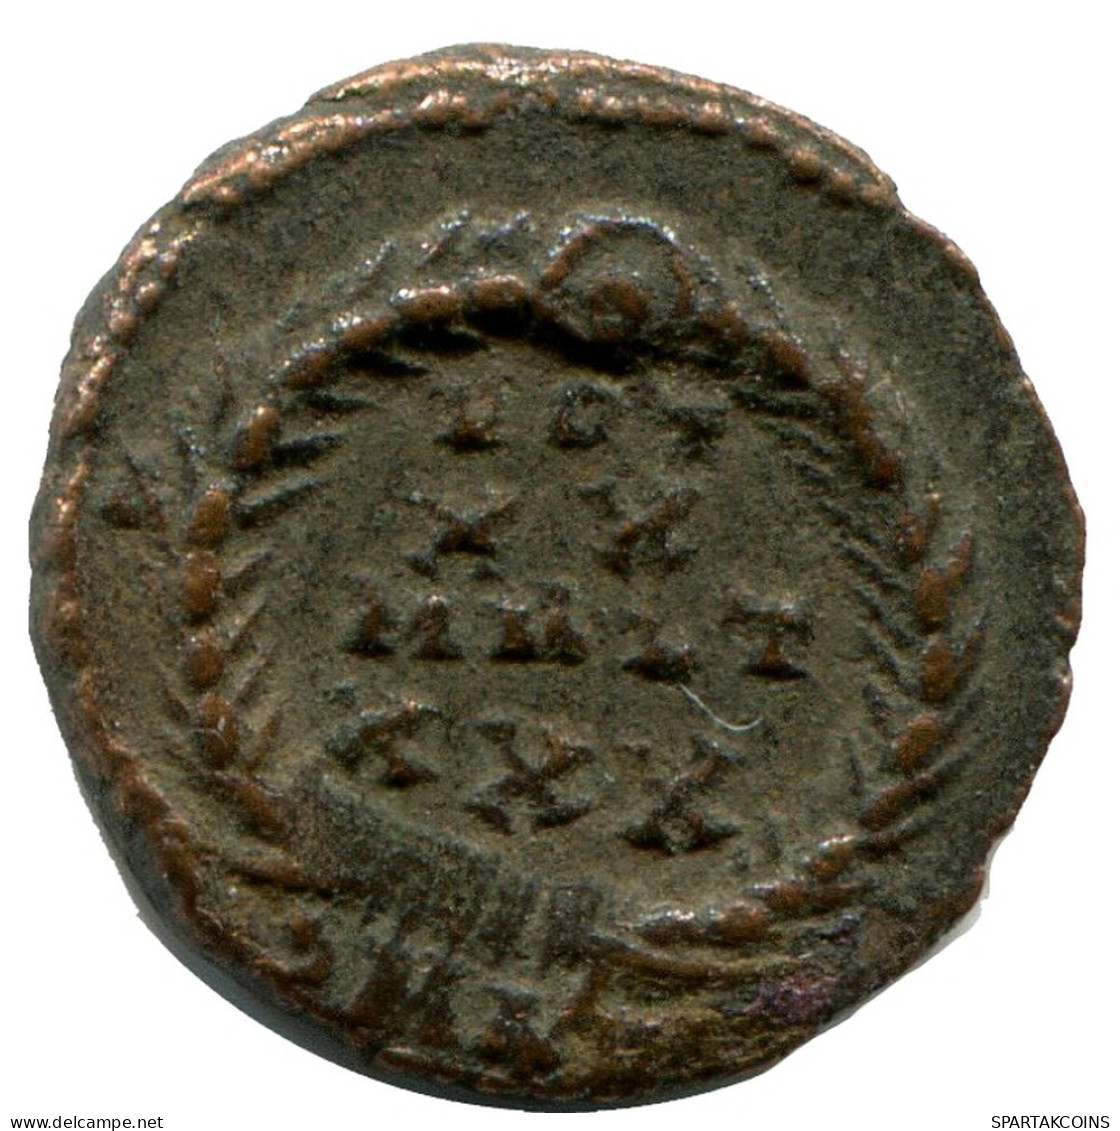 CONSTANTIUS II ALEKSANDRIA FROM THE ROYAL ONTARIO MUSEUM #ANC10497.14.U.A - El Imperio Christiano (307 / 363)